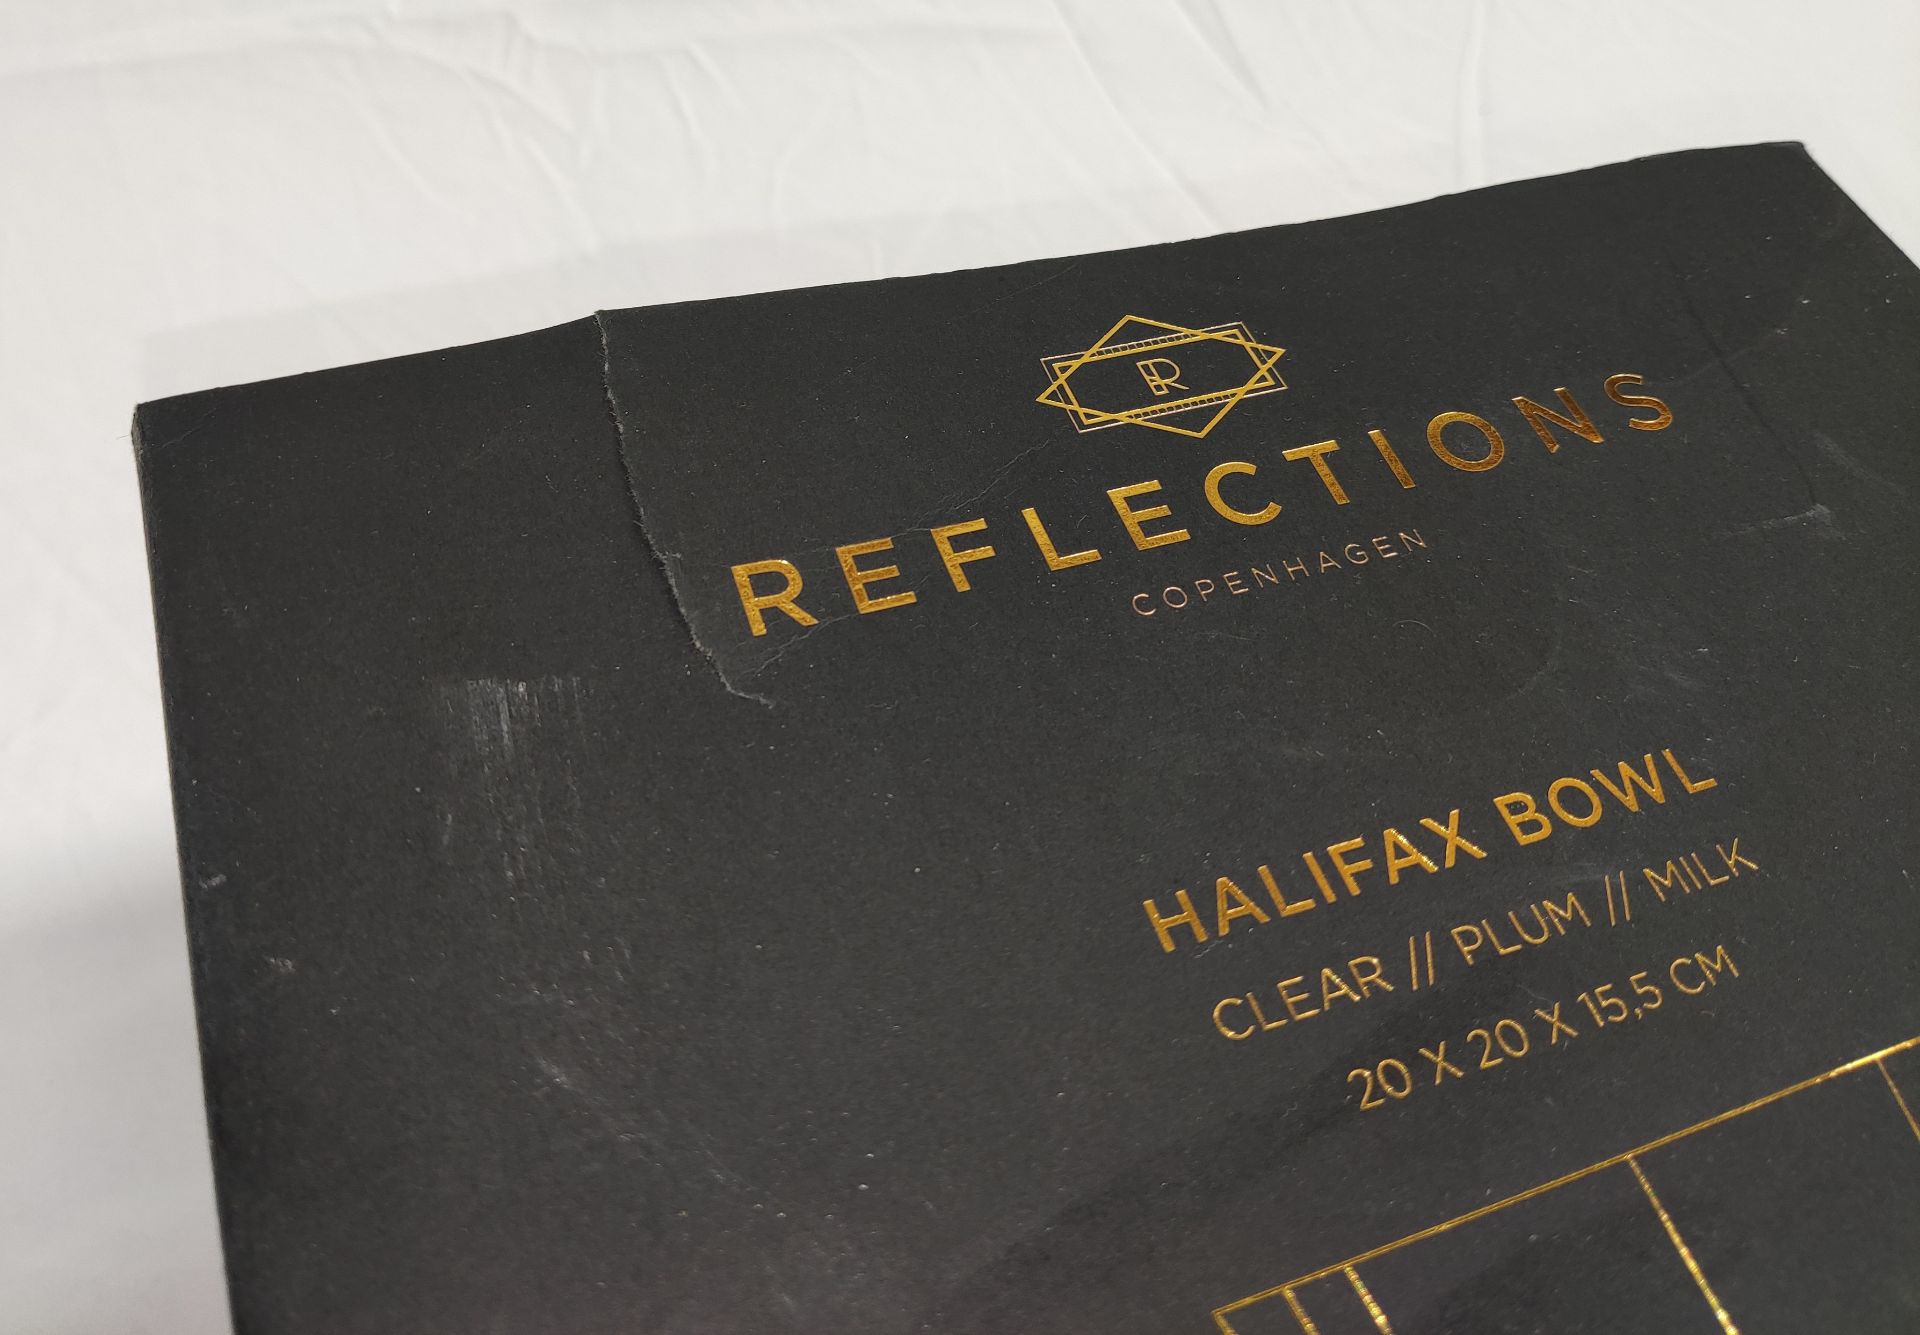 1 x REFLECTIONS COPENHAGEN Halifax Hand-Cut Crystal Glass Bowl In Clear/Milk/Plum - Original RRP £ - Image 19 of 21